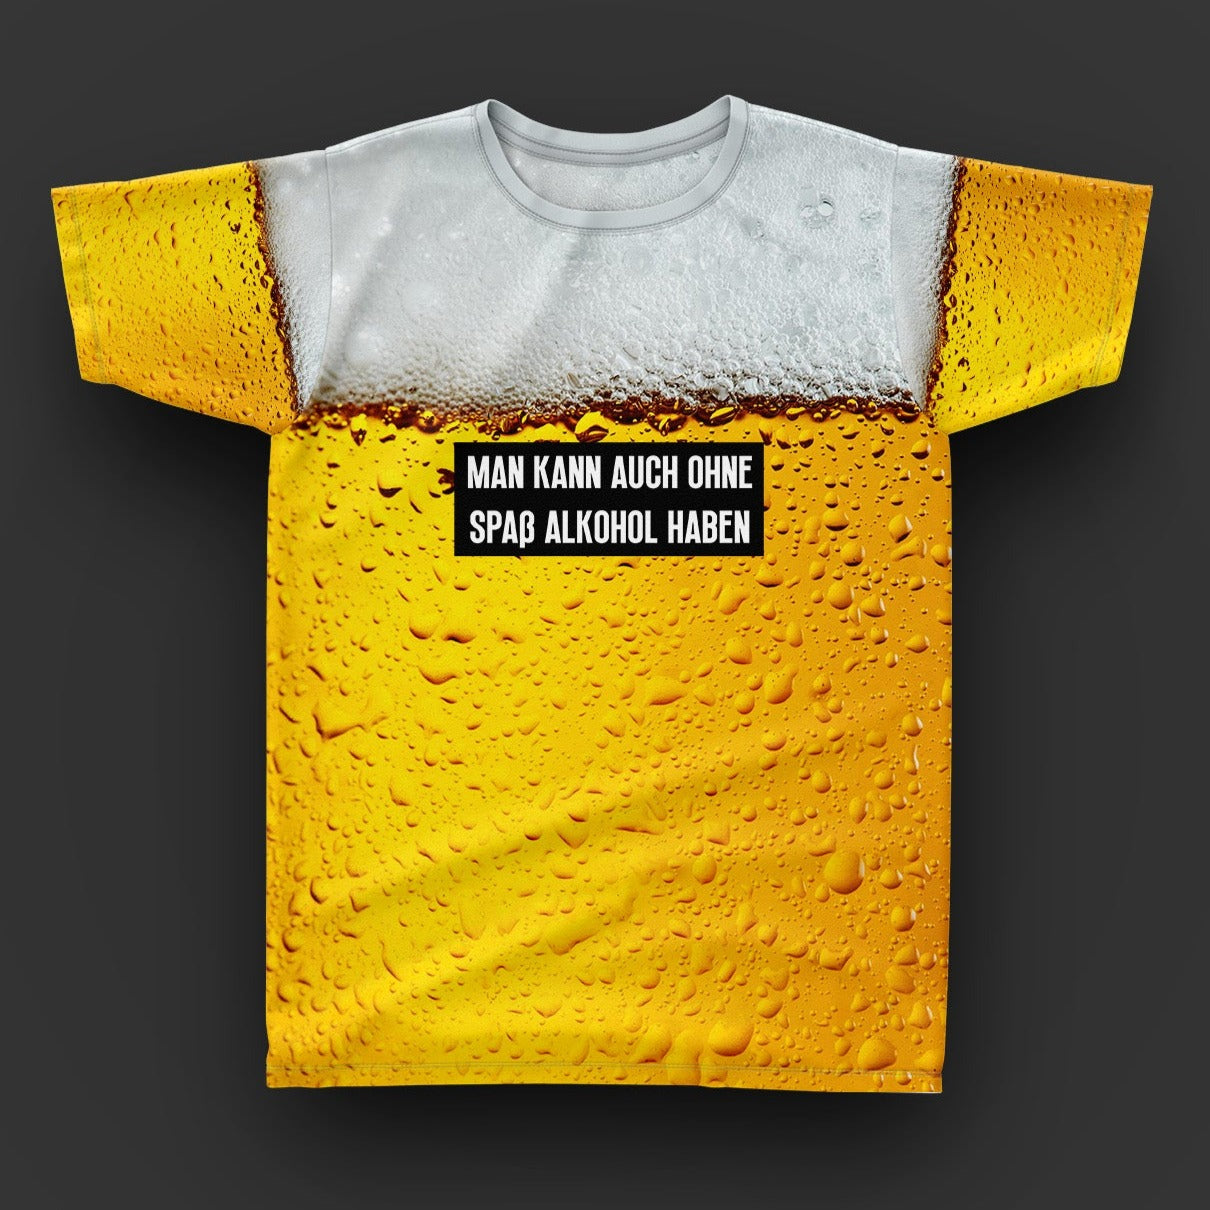 OHNE SPAß ALKOHOL - Fullprint Tshirt